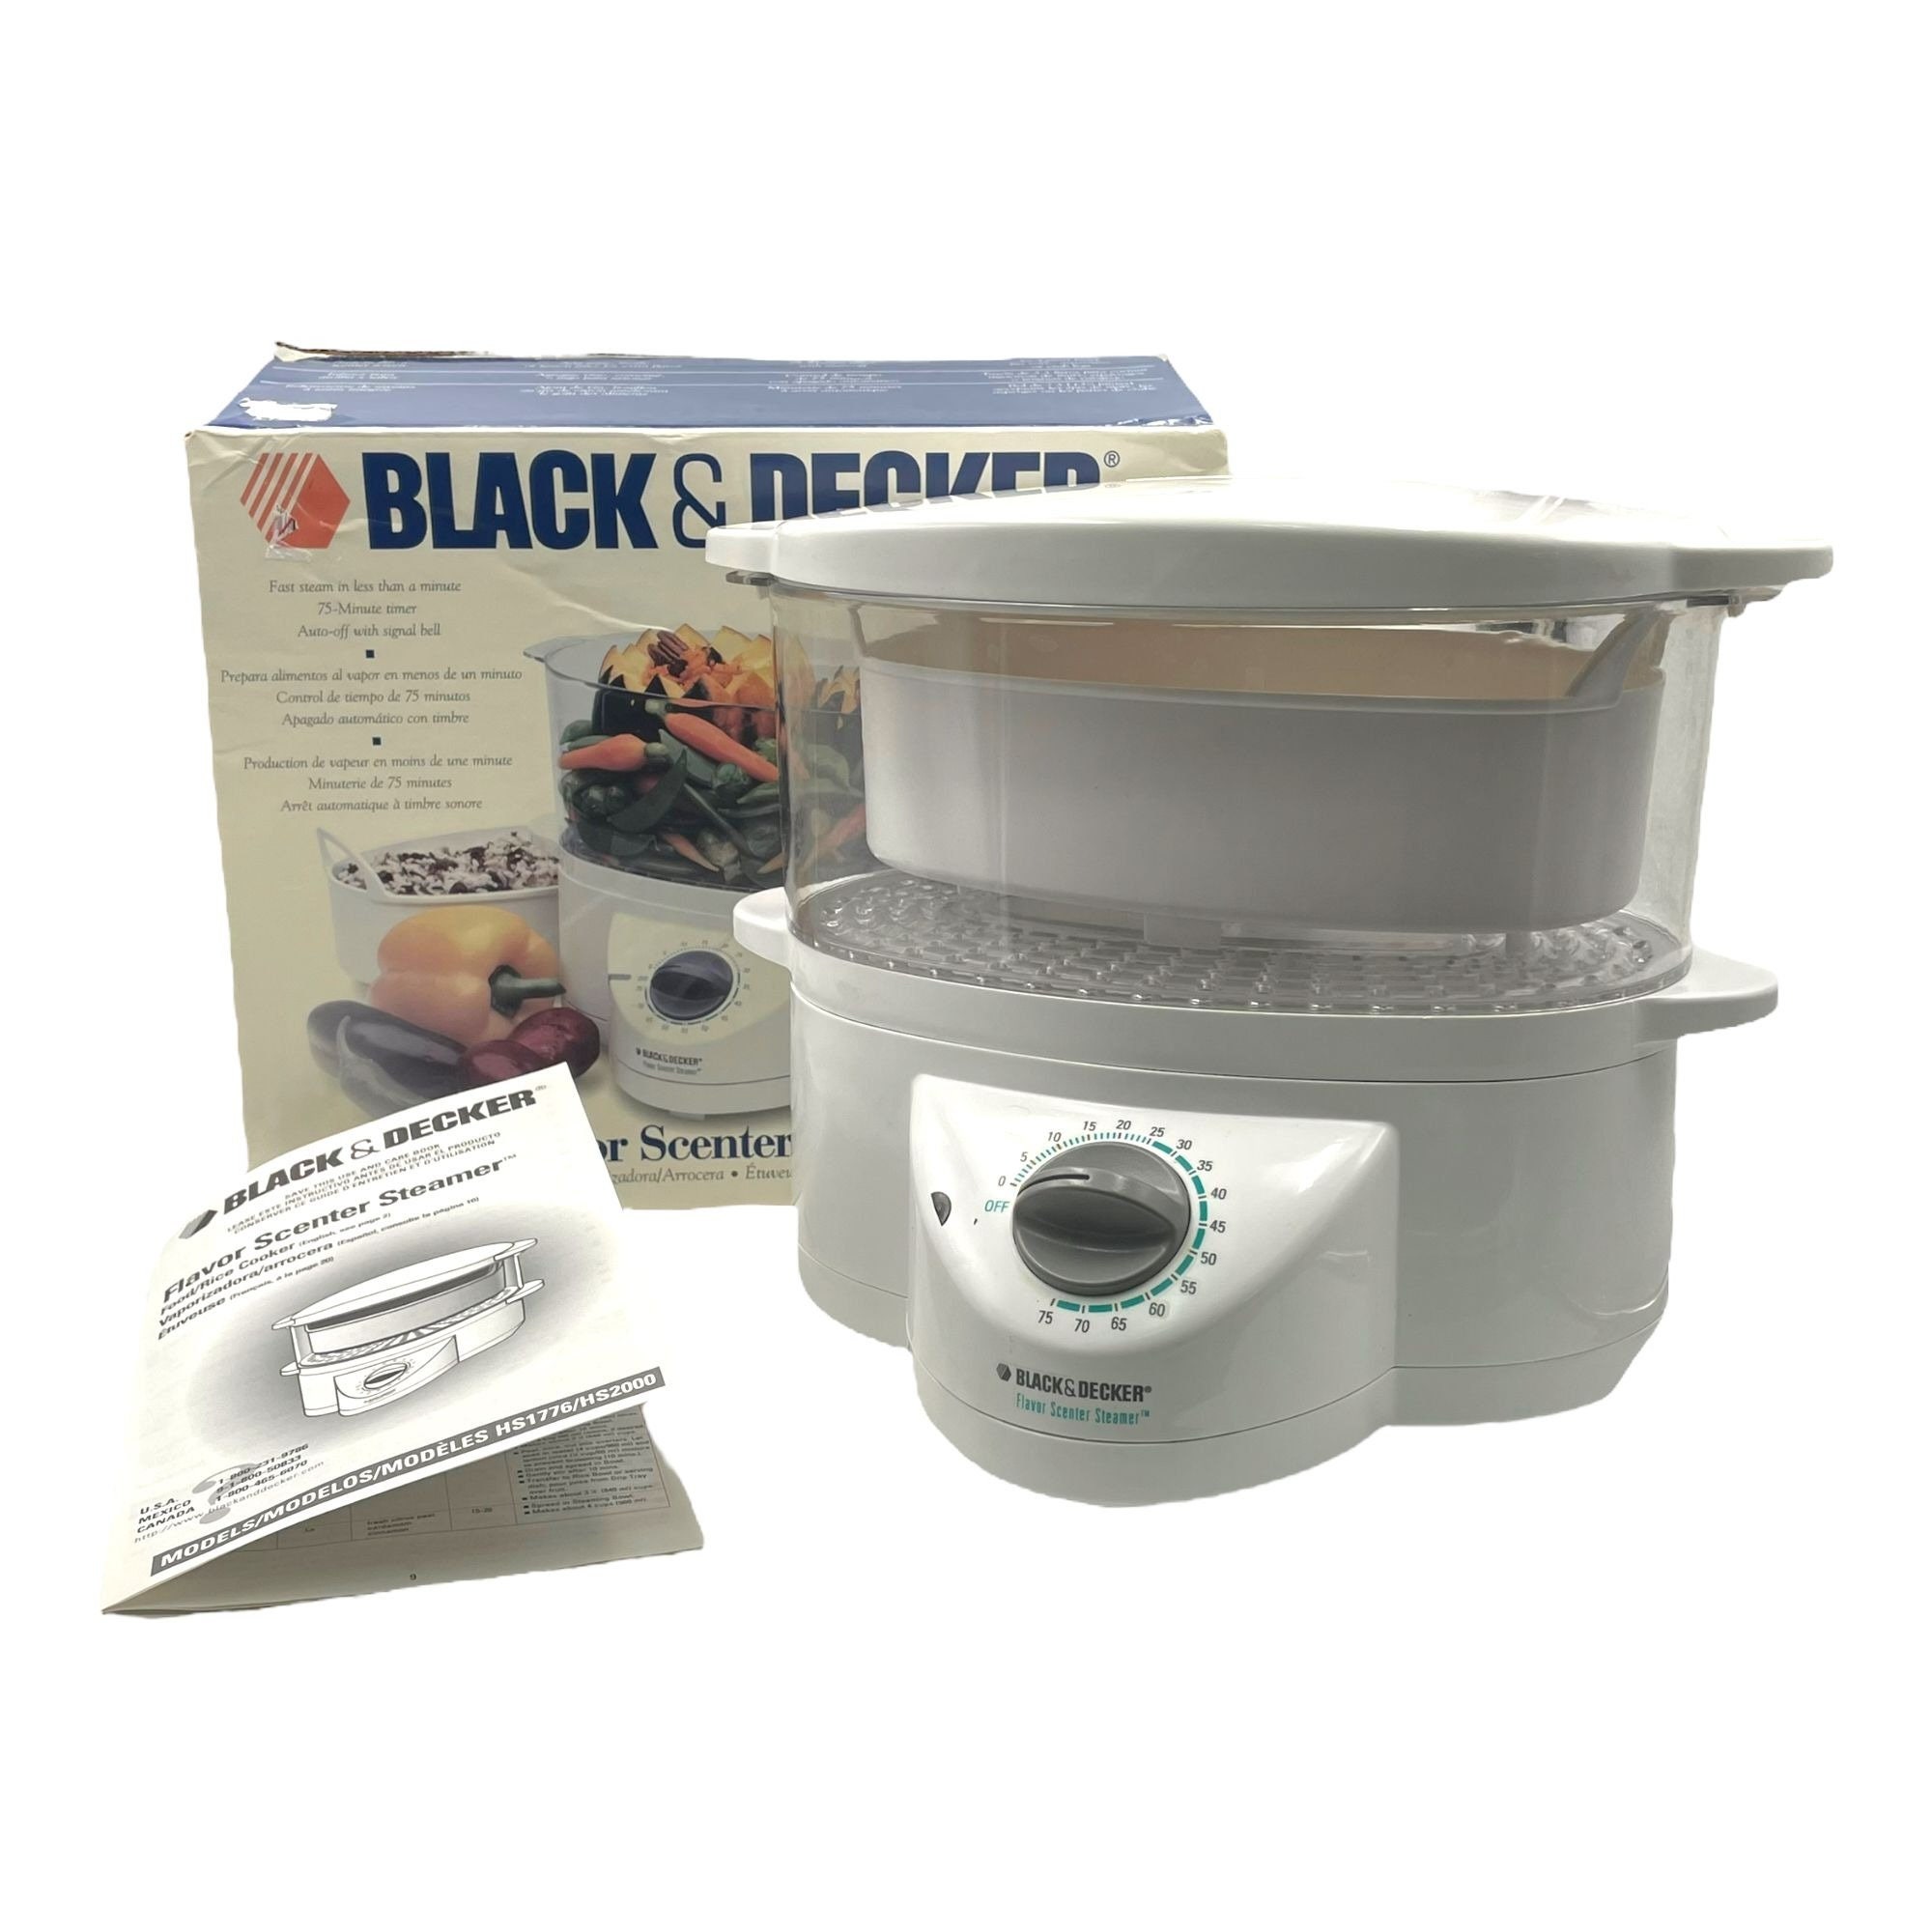 Black & Decker HS2000 Flavor Scenter Steamer and Rice Cooker